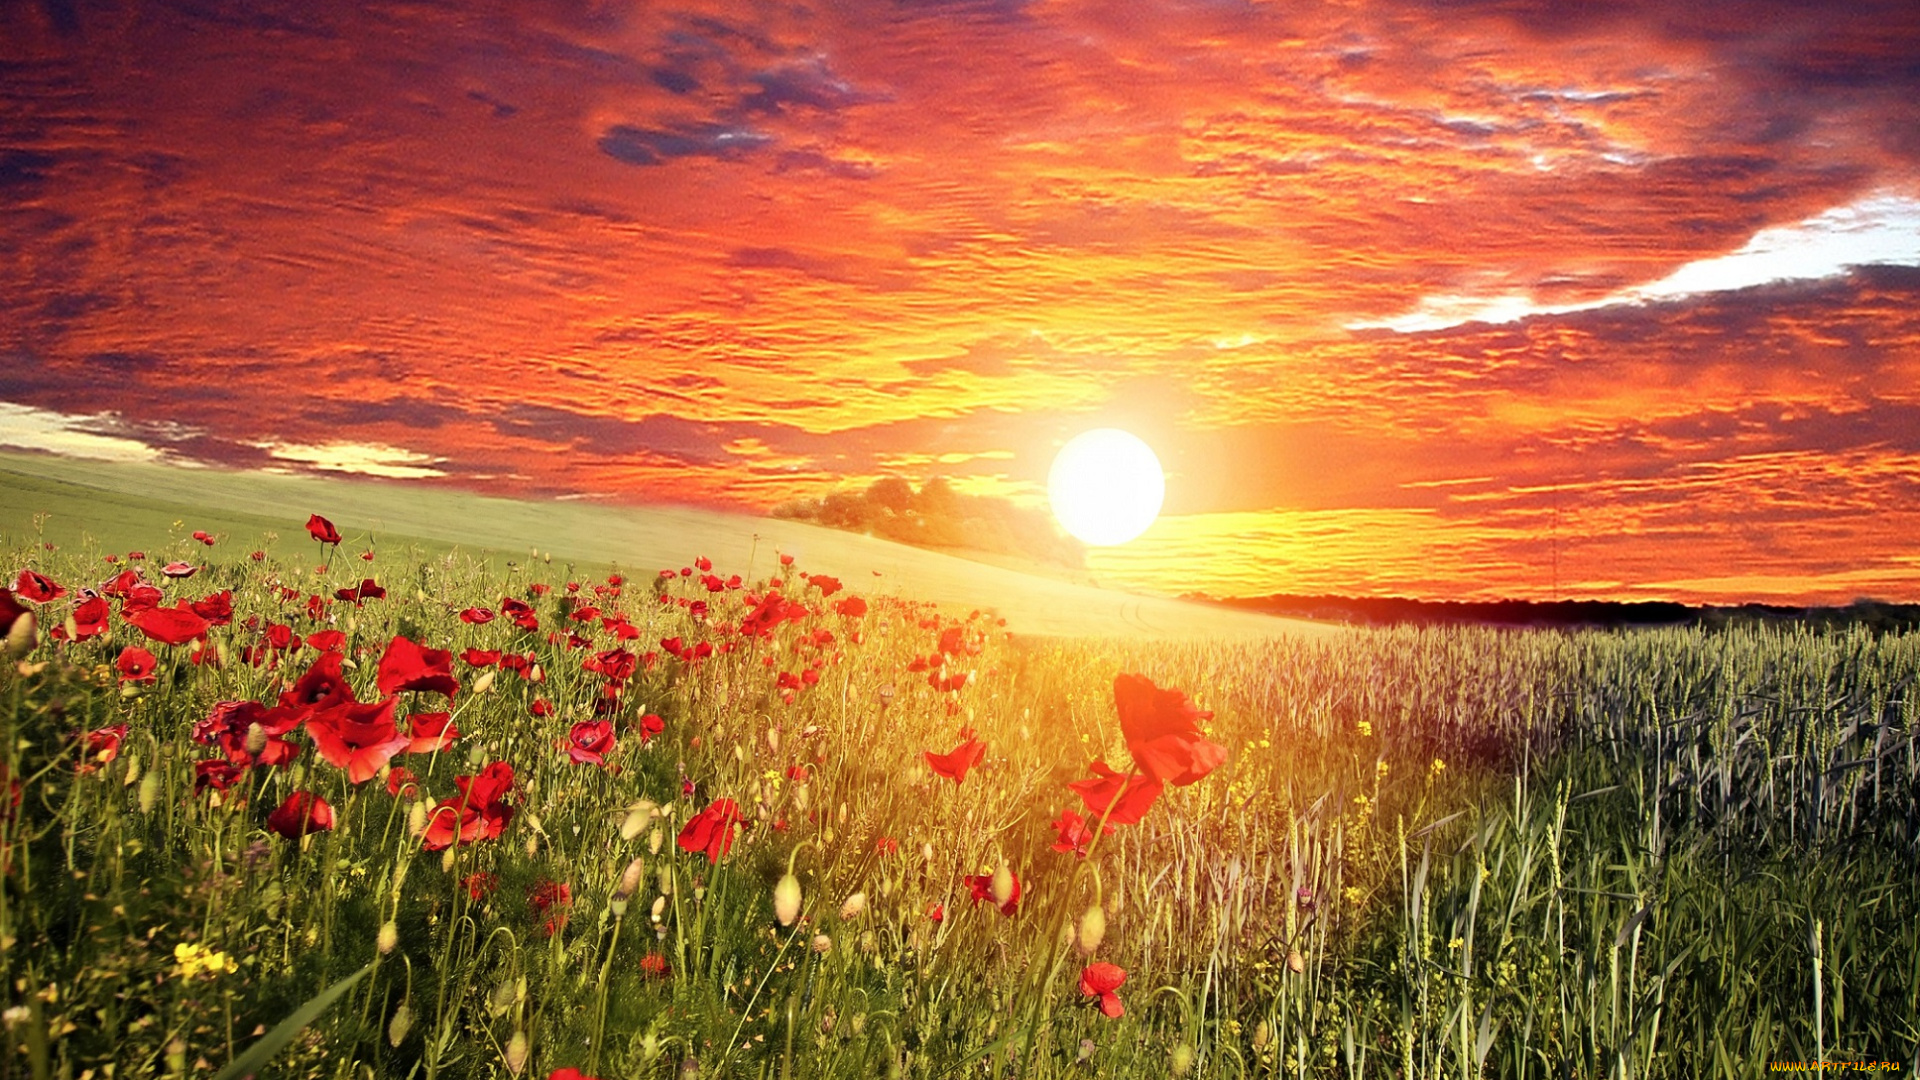 цветы, маки, закат, облака, небо, солнце, красные, поле, трава